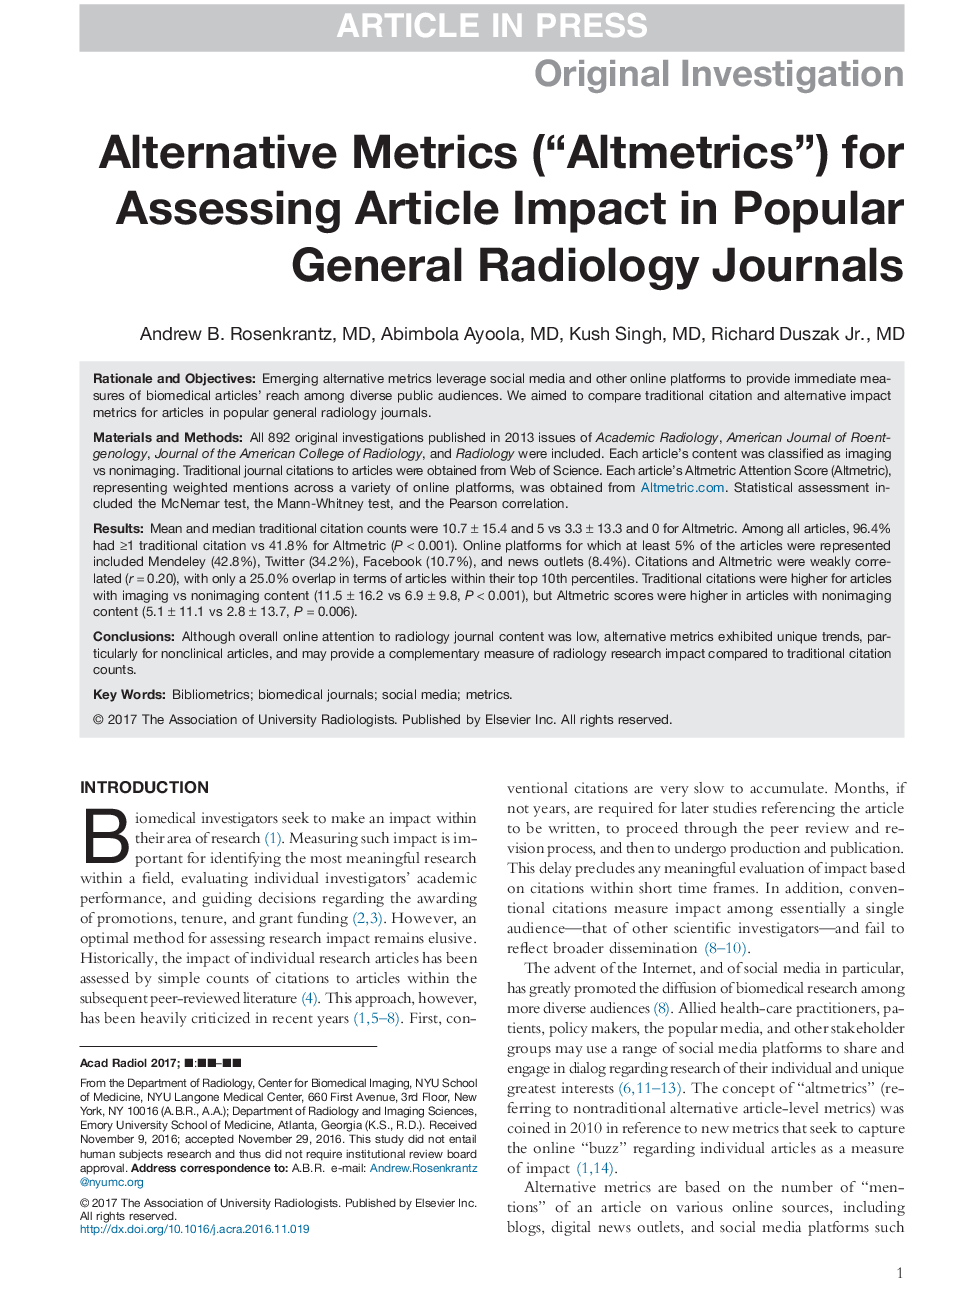 Alternative Metrics (“Altmetrics”) for Assessing Article Impact in Popular General Radiology Journals